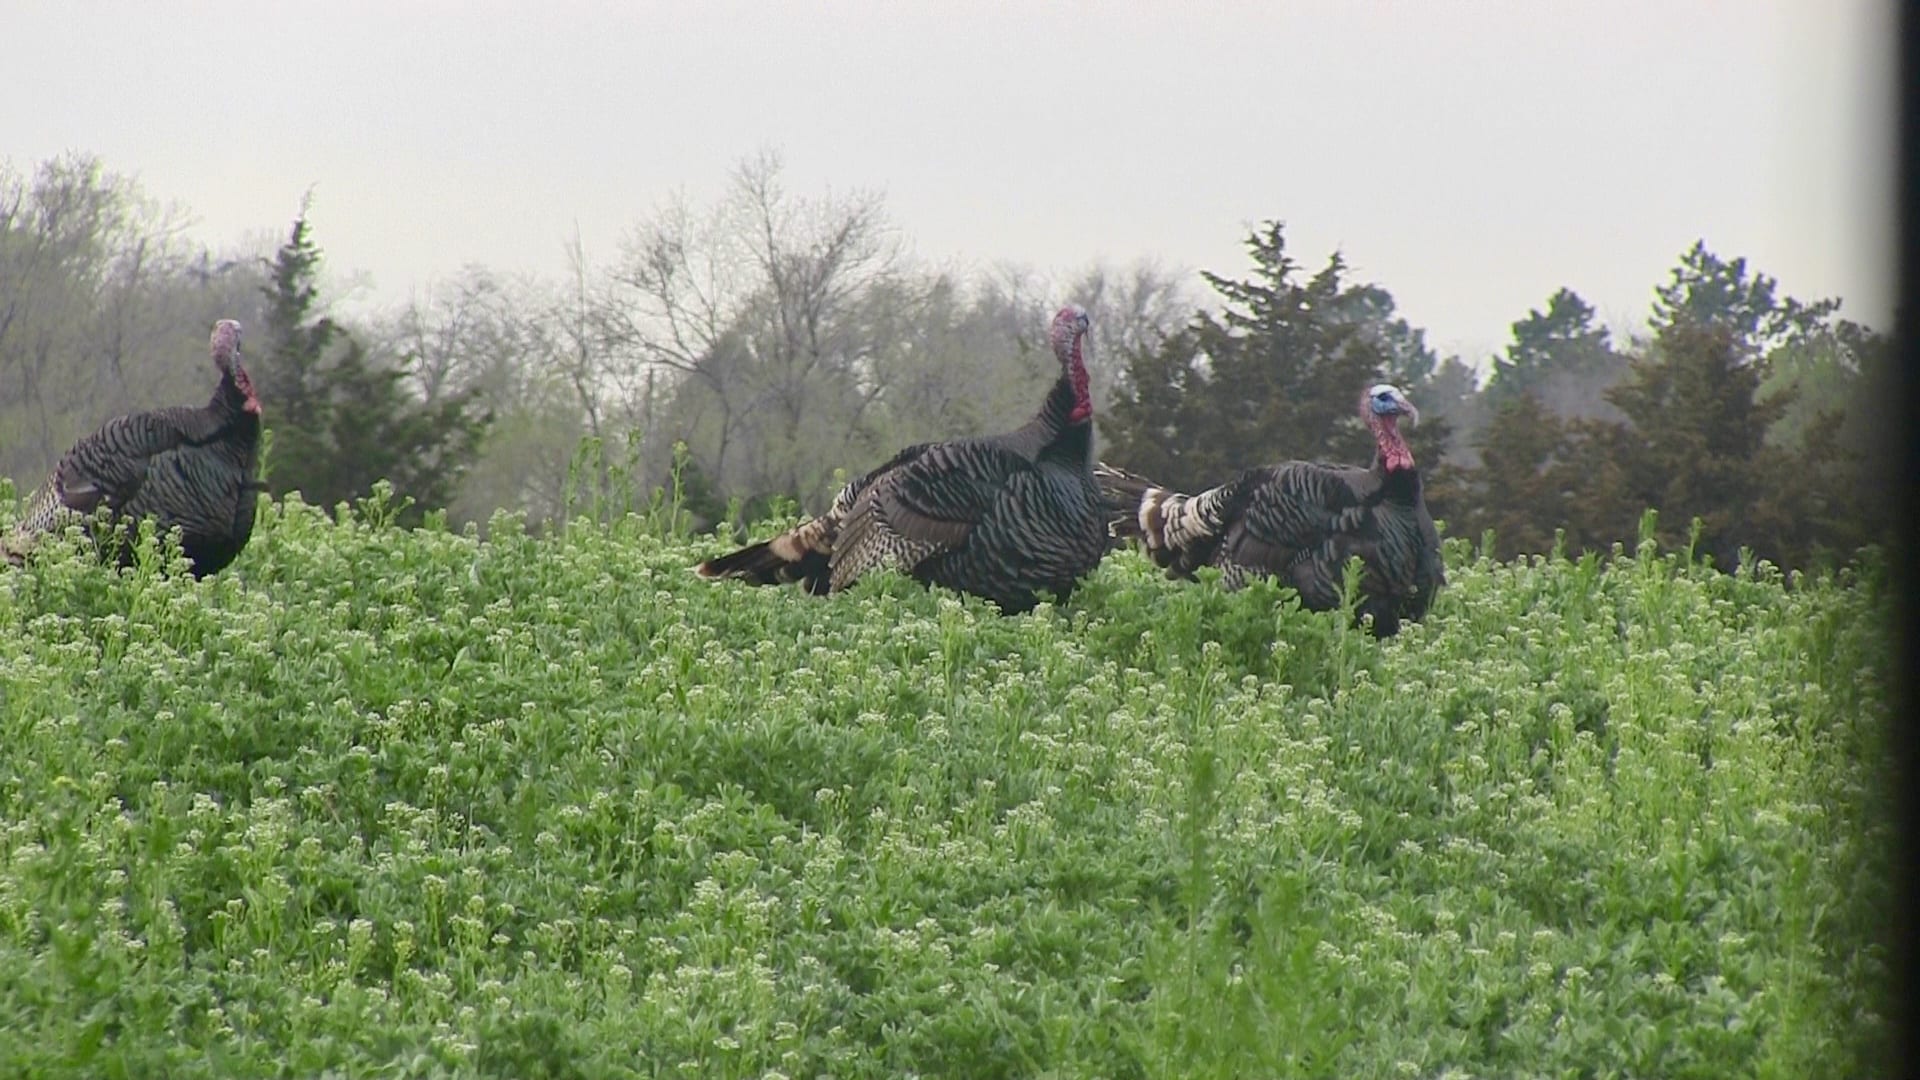 jakes in the field in Nebraska turkey camp